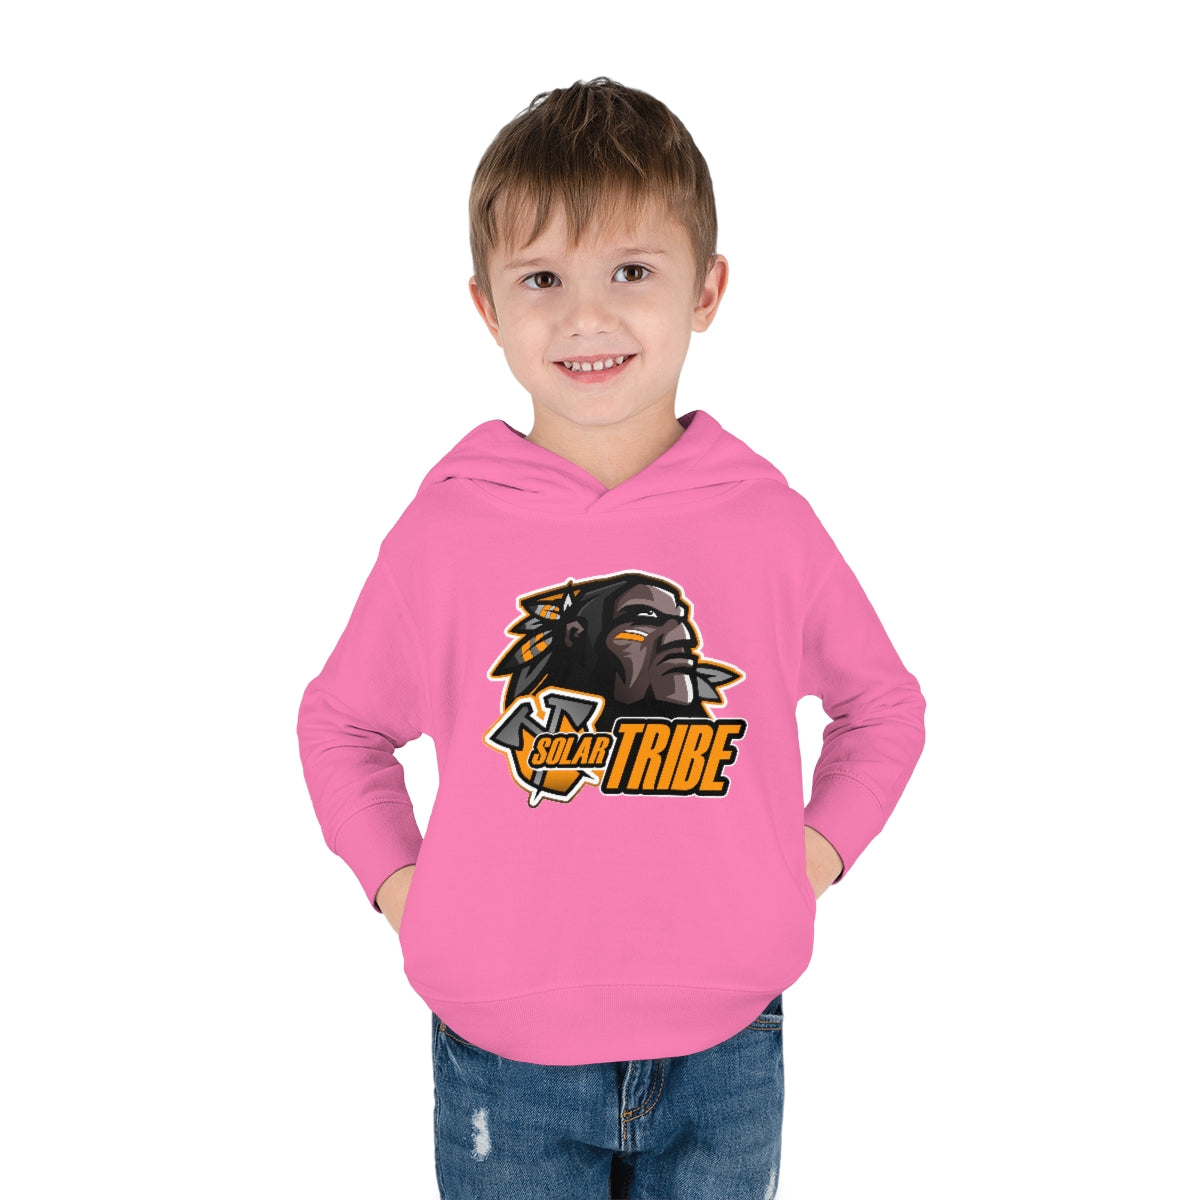 Solar Tribe R 2T,4T,5-6T Black Logo Front Toddler Pullover Fleece Hoodie